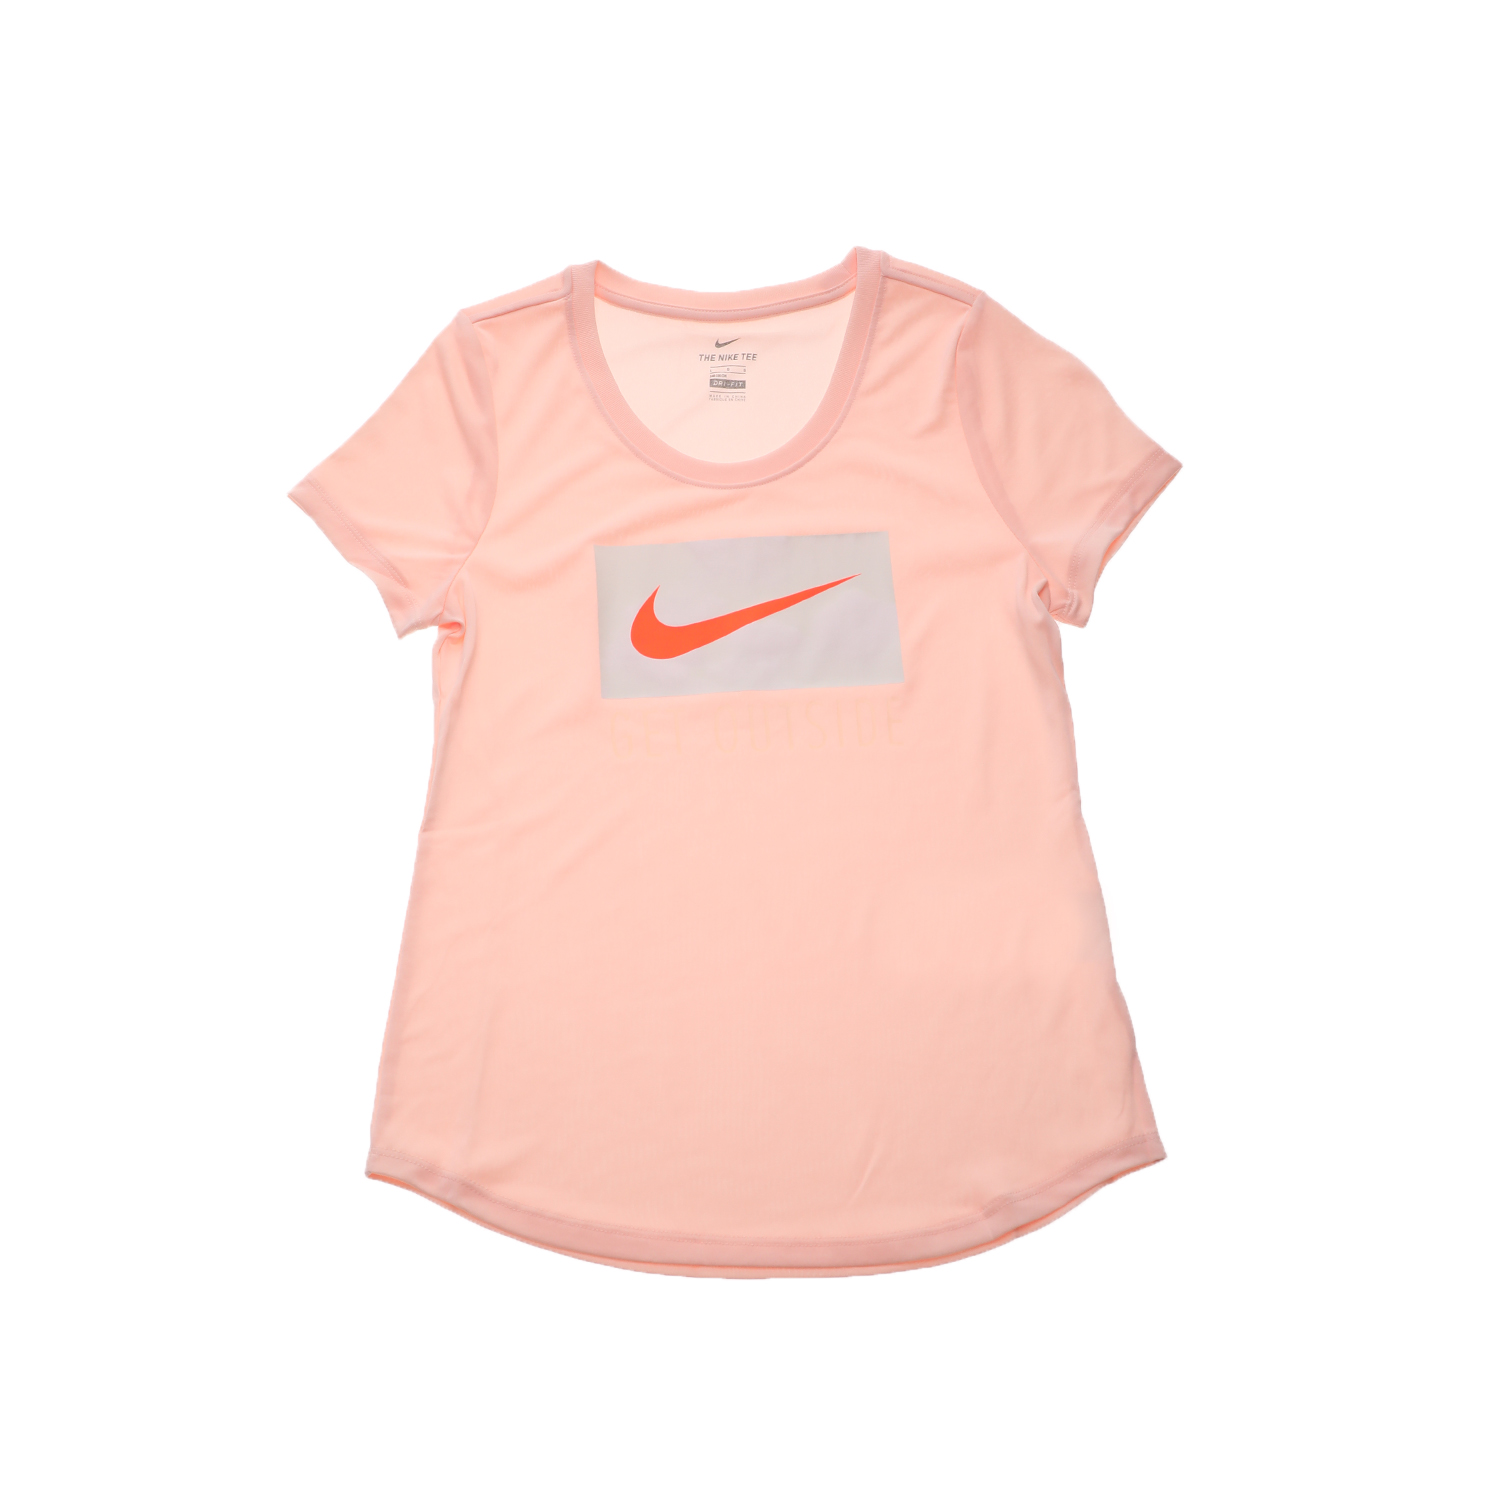 NIKE - Παιδικό αθλητικό t-shirt NIKE SW DRY LEG GO SCOOP UV ροζ Παιδικά/Girls/Ρούχα/Αθλητικά